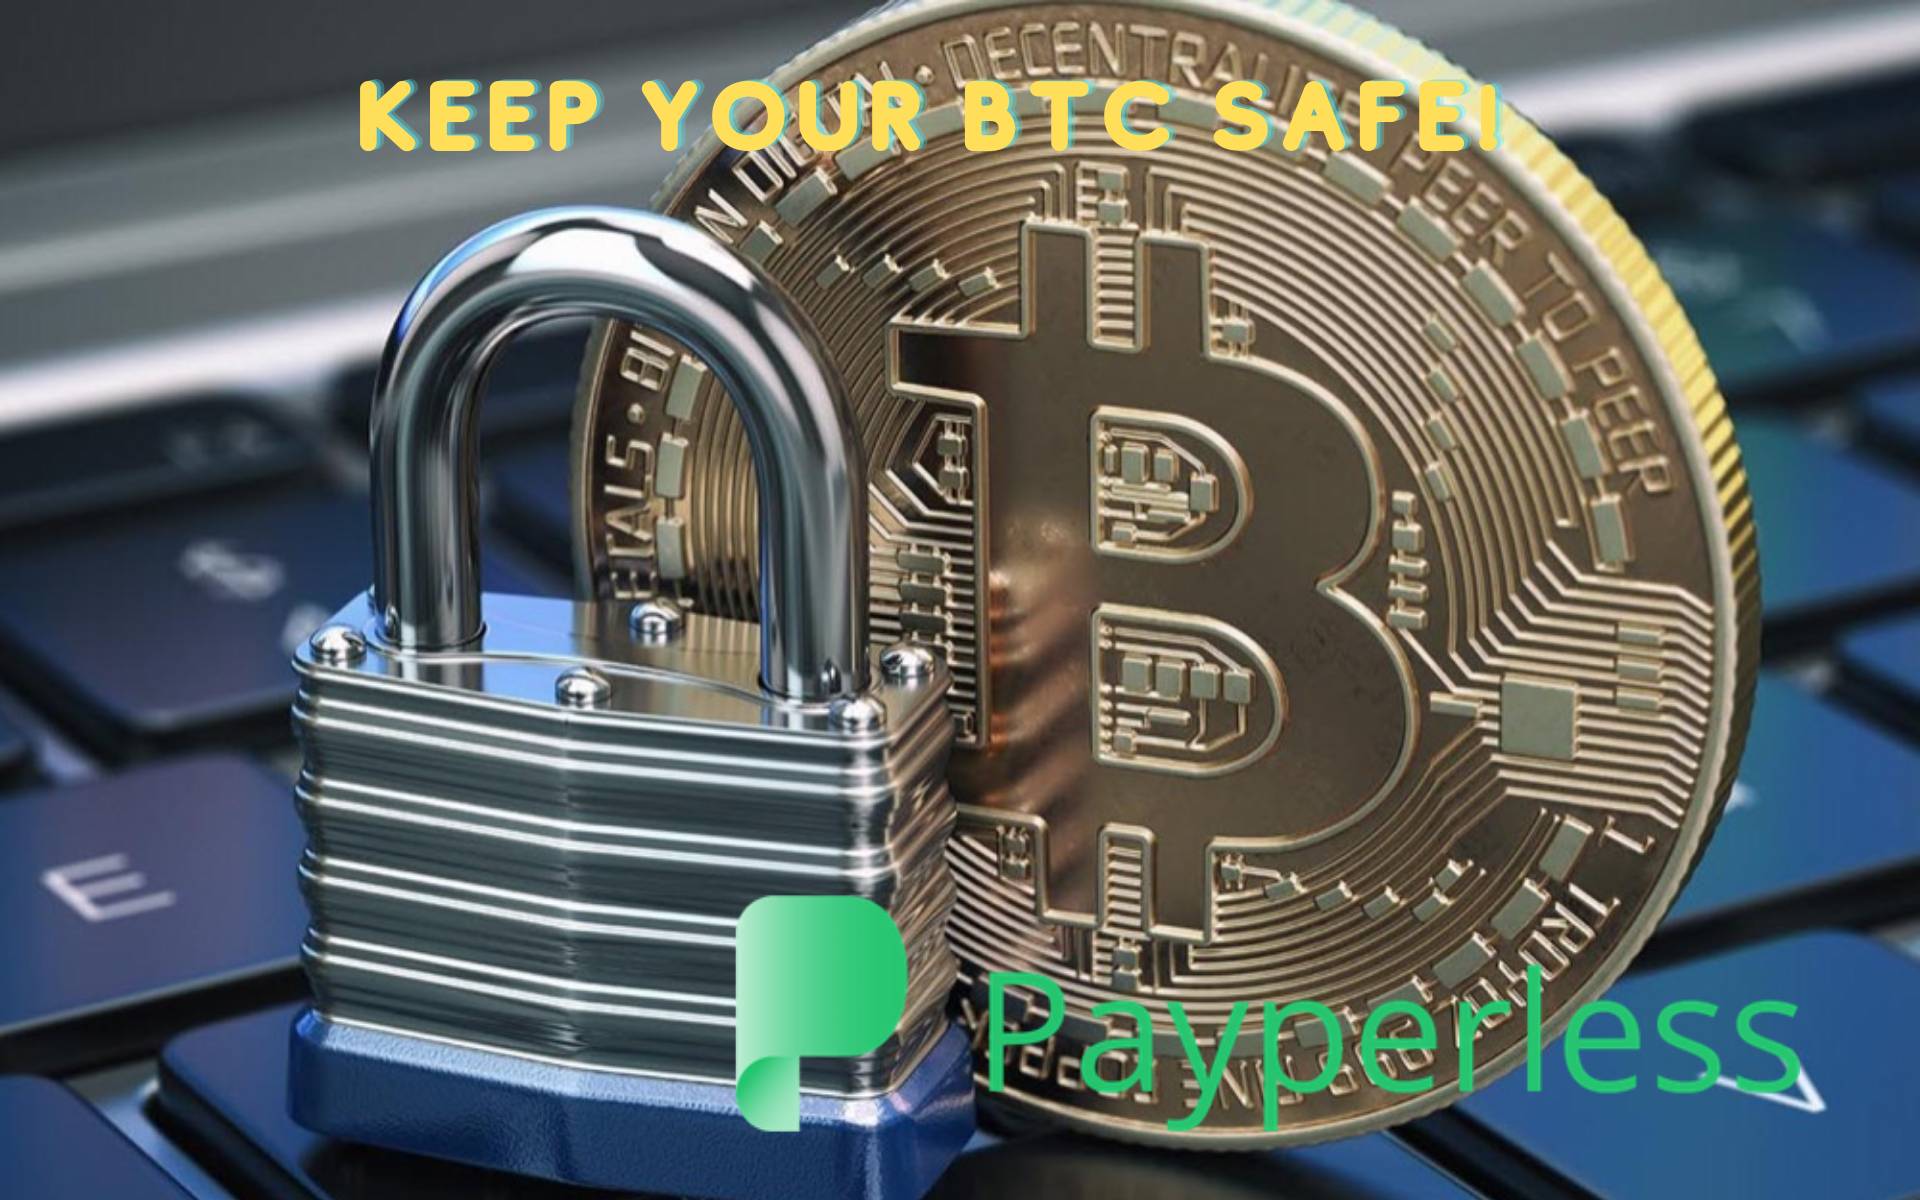 Keep your BTC safe